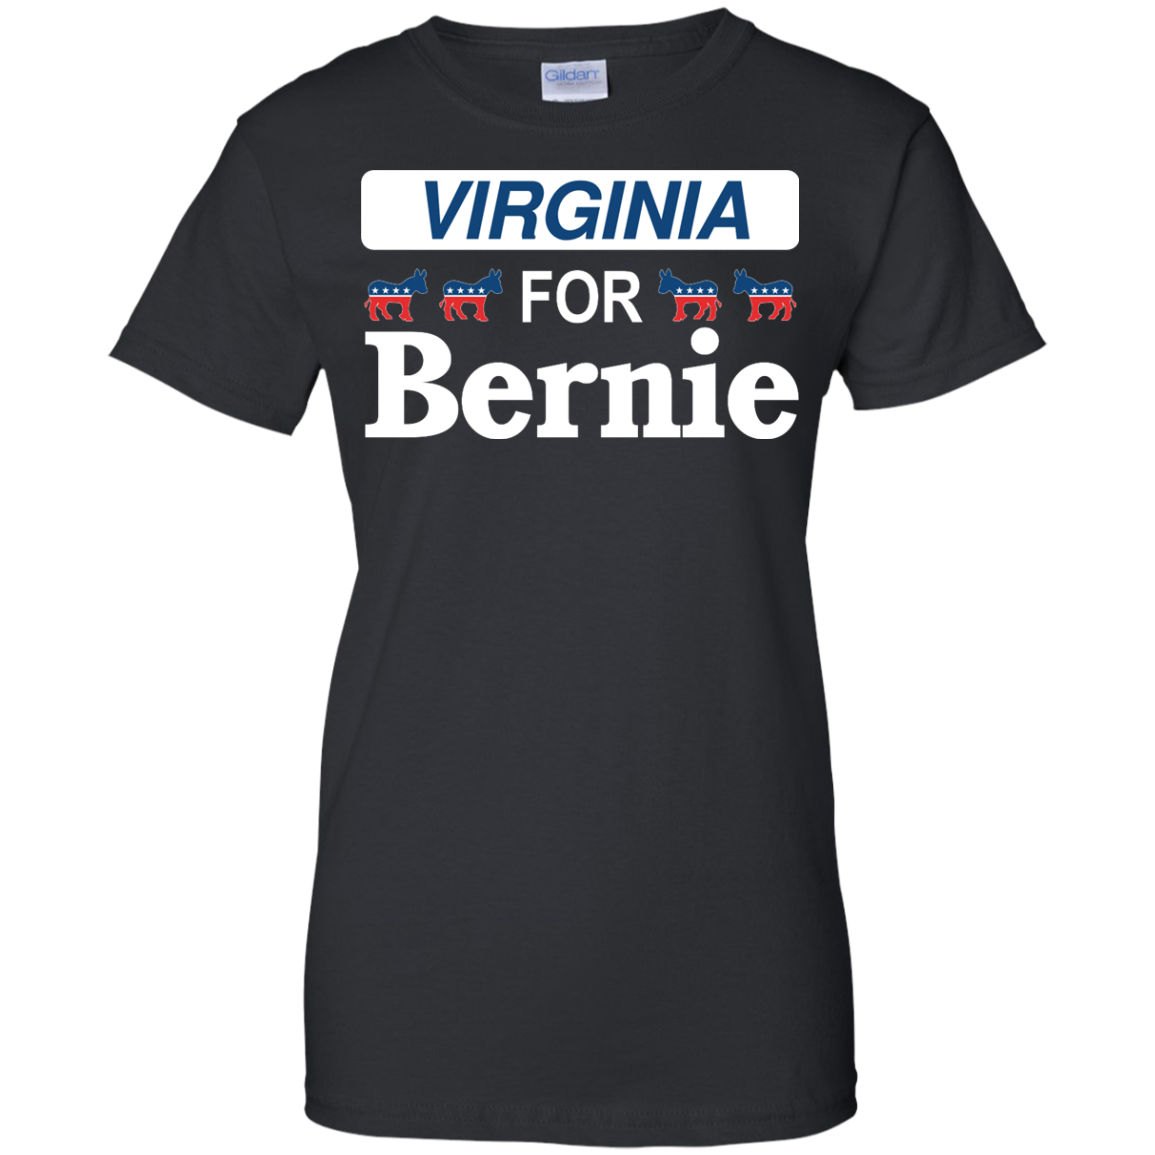 Top Selling Amazing Tee President Virginia For Bernie 2016 Presidentauto Shirts